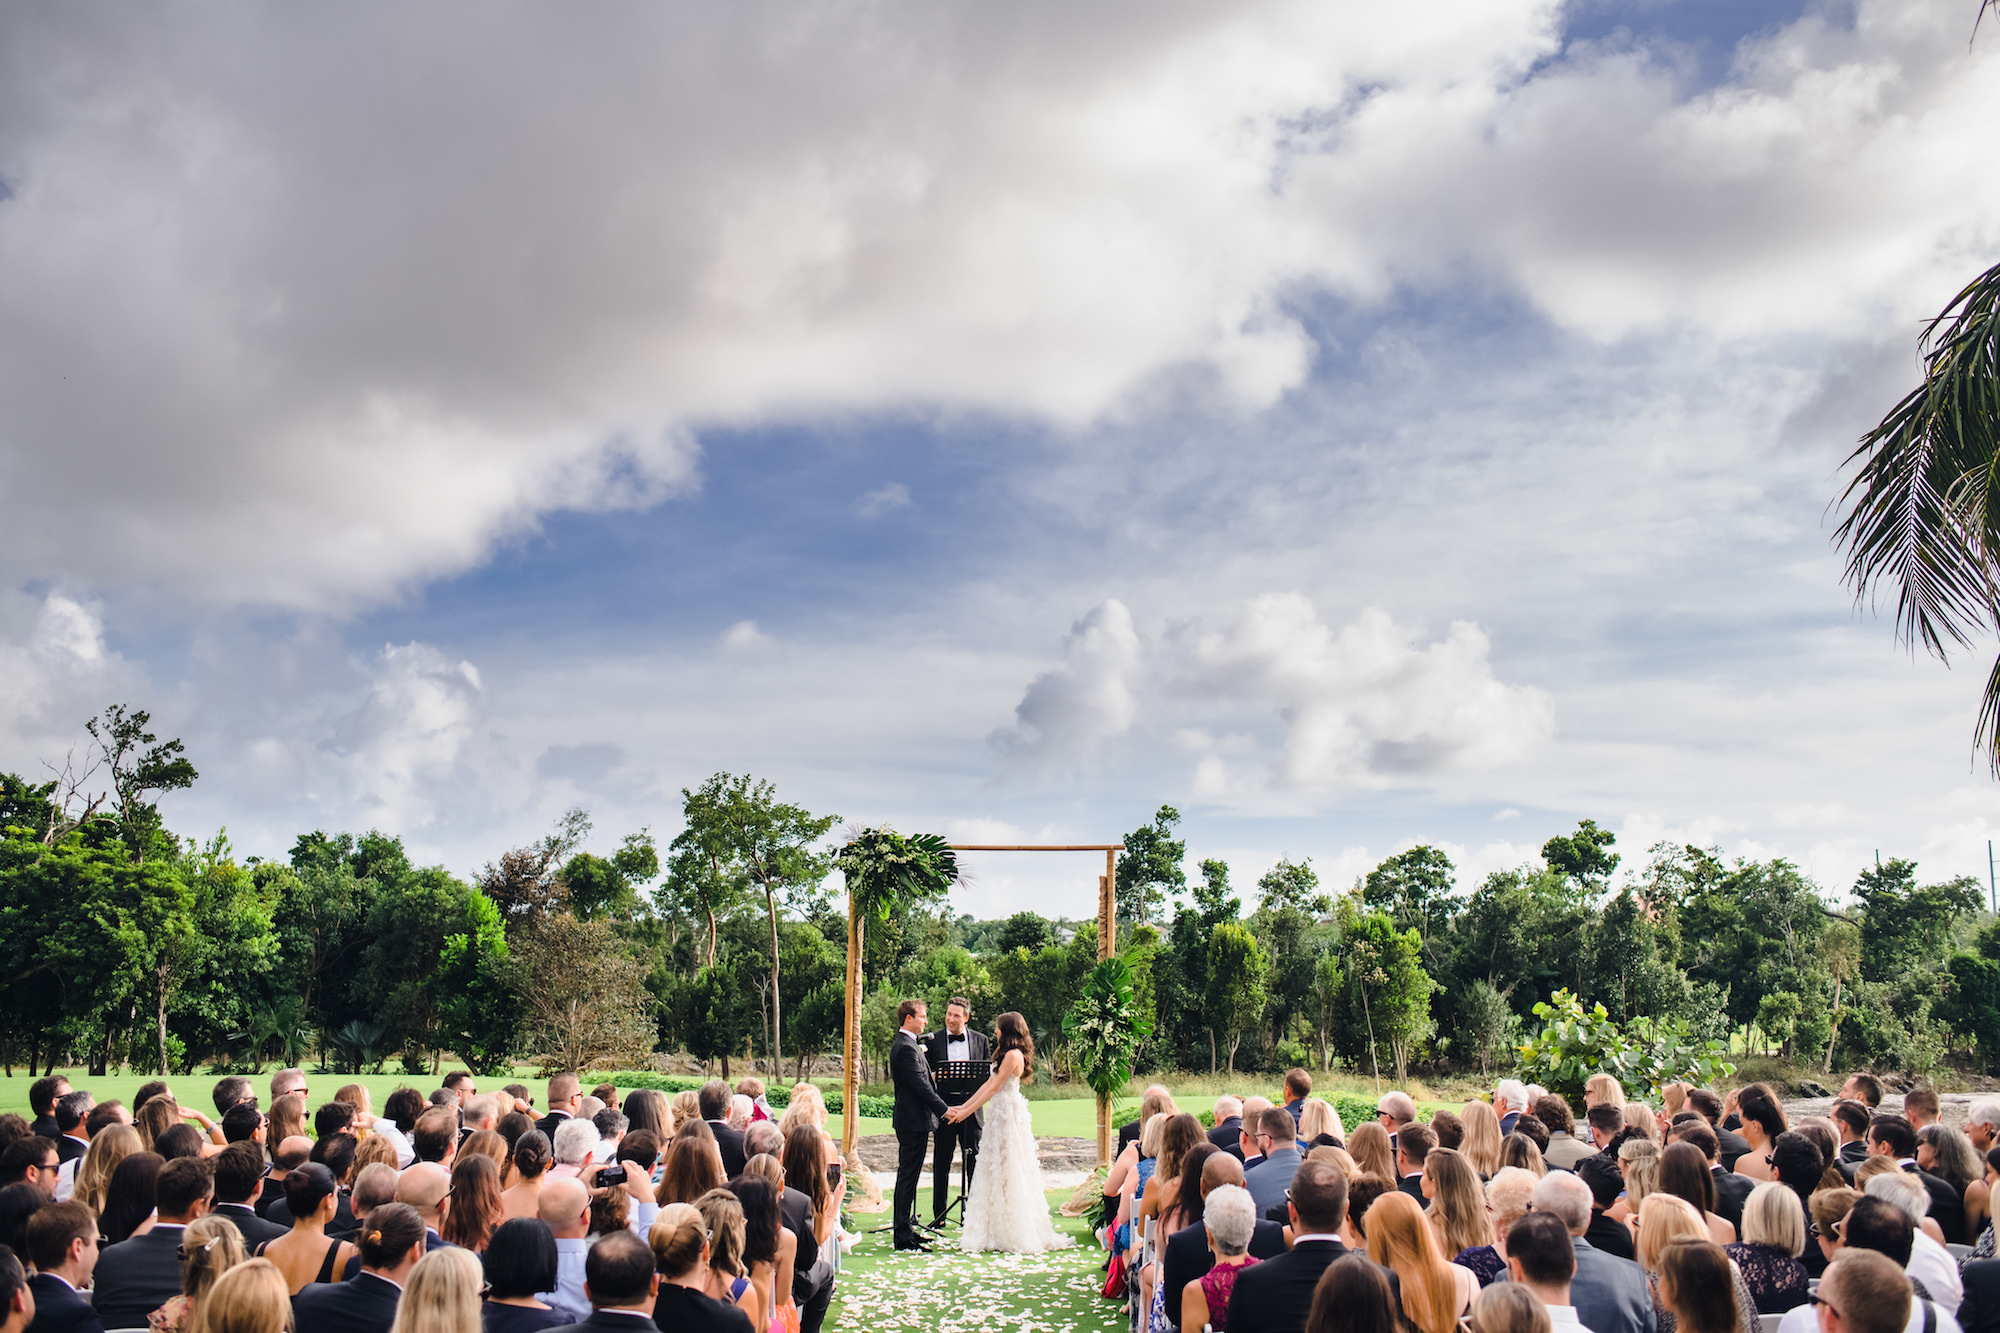 5 lyndah wells wedding photography visual flow presets